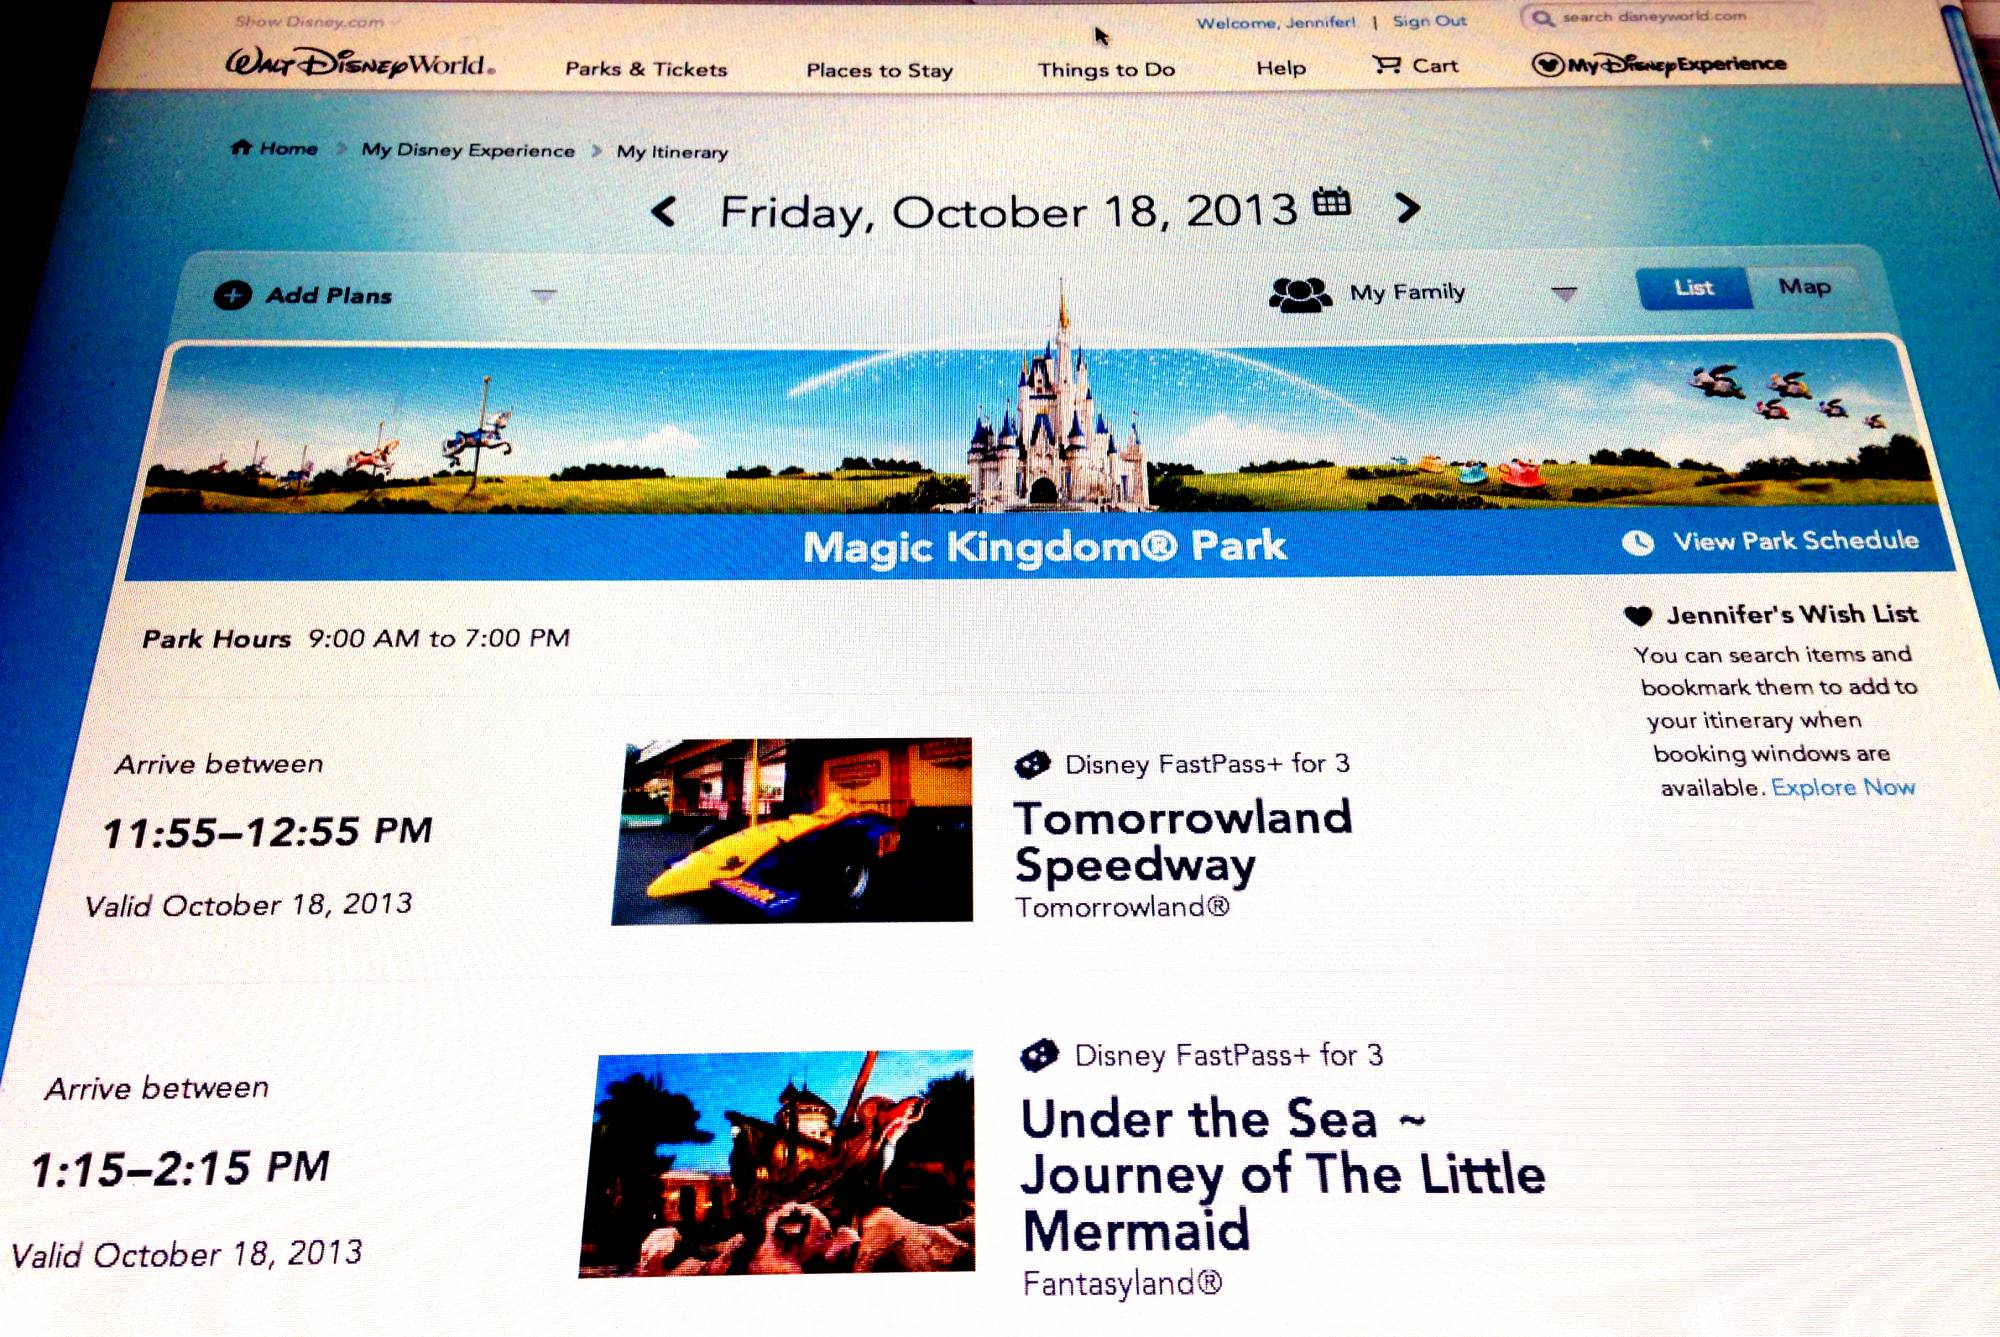 Learn about Walt Disney World's latest technology - My Disney Experience |PassPorter.com